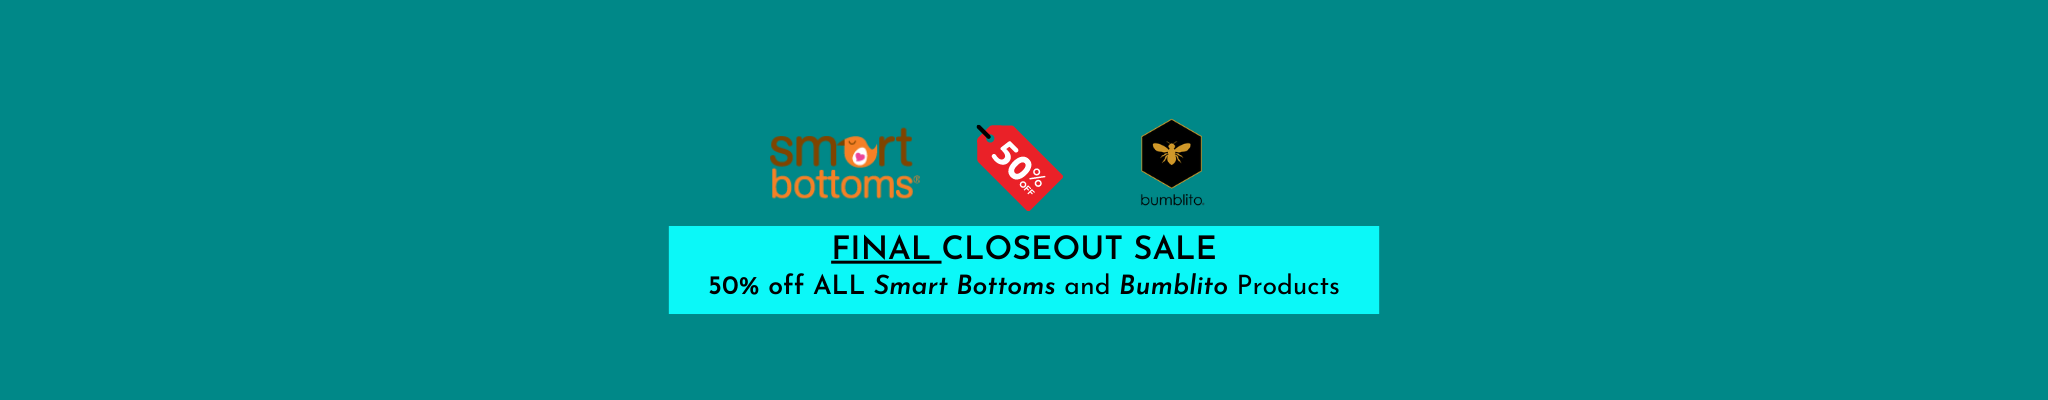 Final Closeout Sale - Smart Bottoms & Bumblito